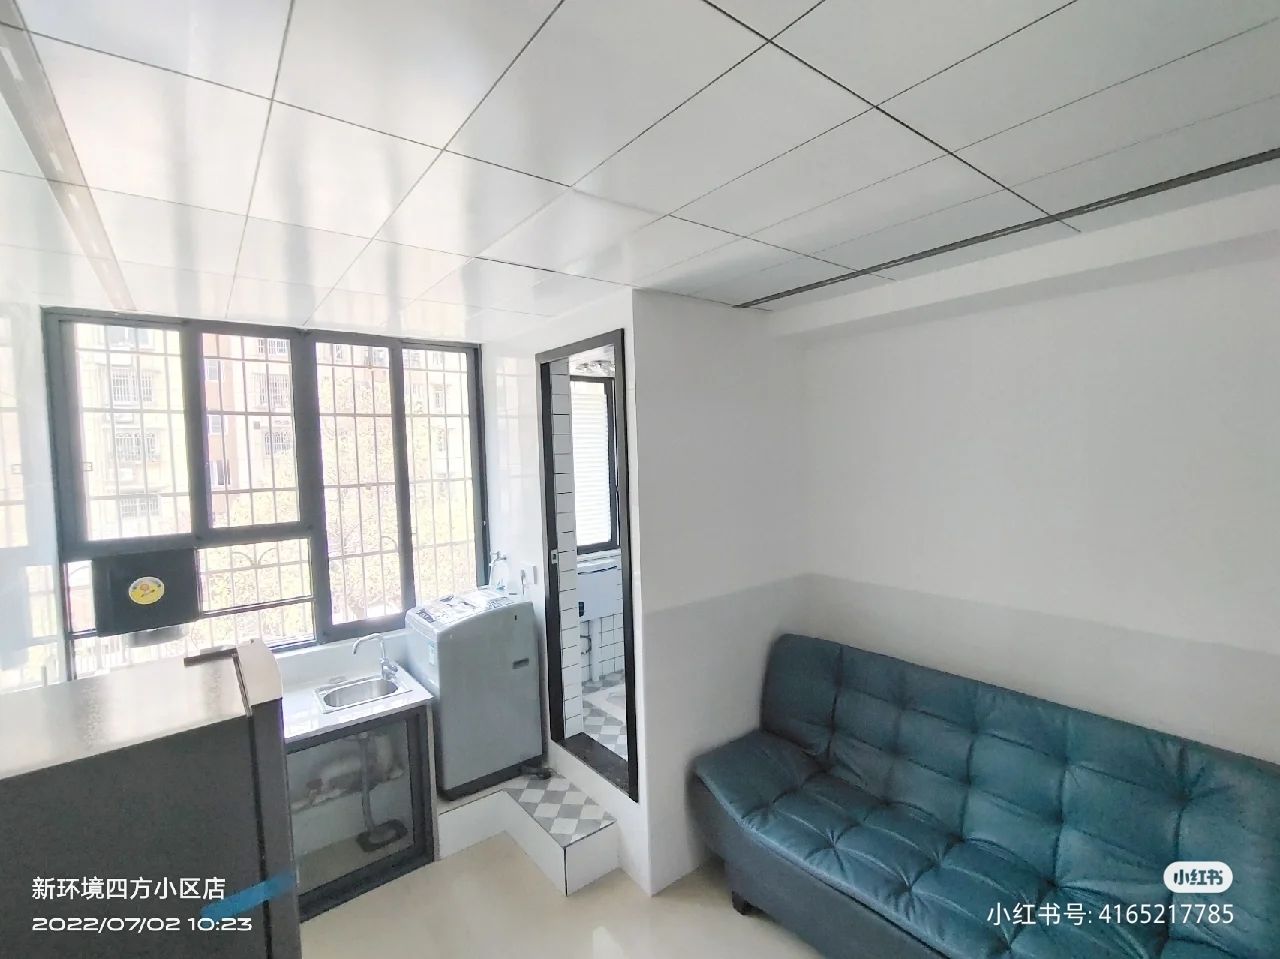 Changsha-Kaifu-Cozy Home,Clean&Comfy,No Gender Limit